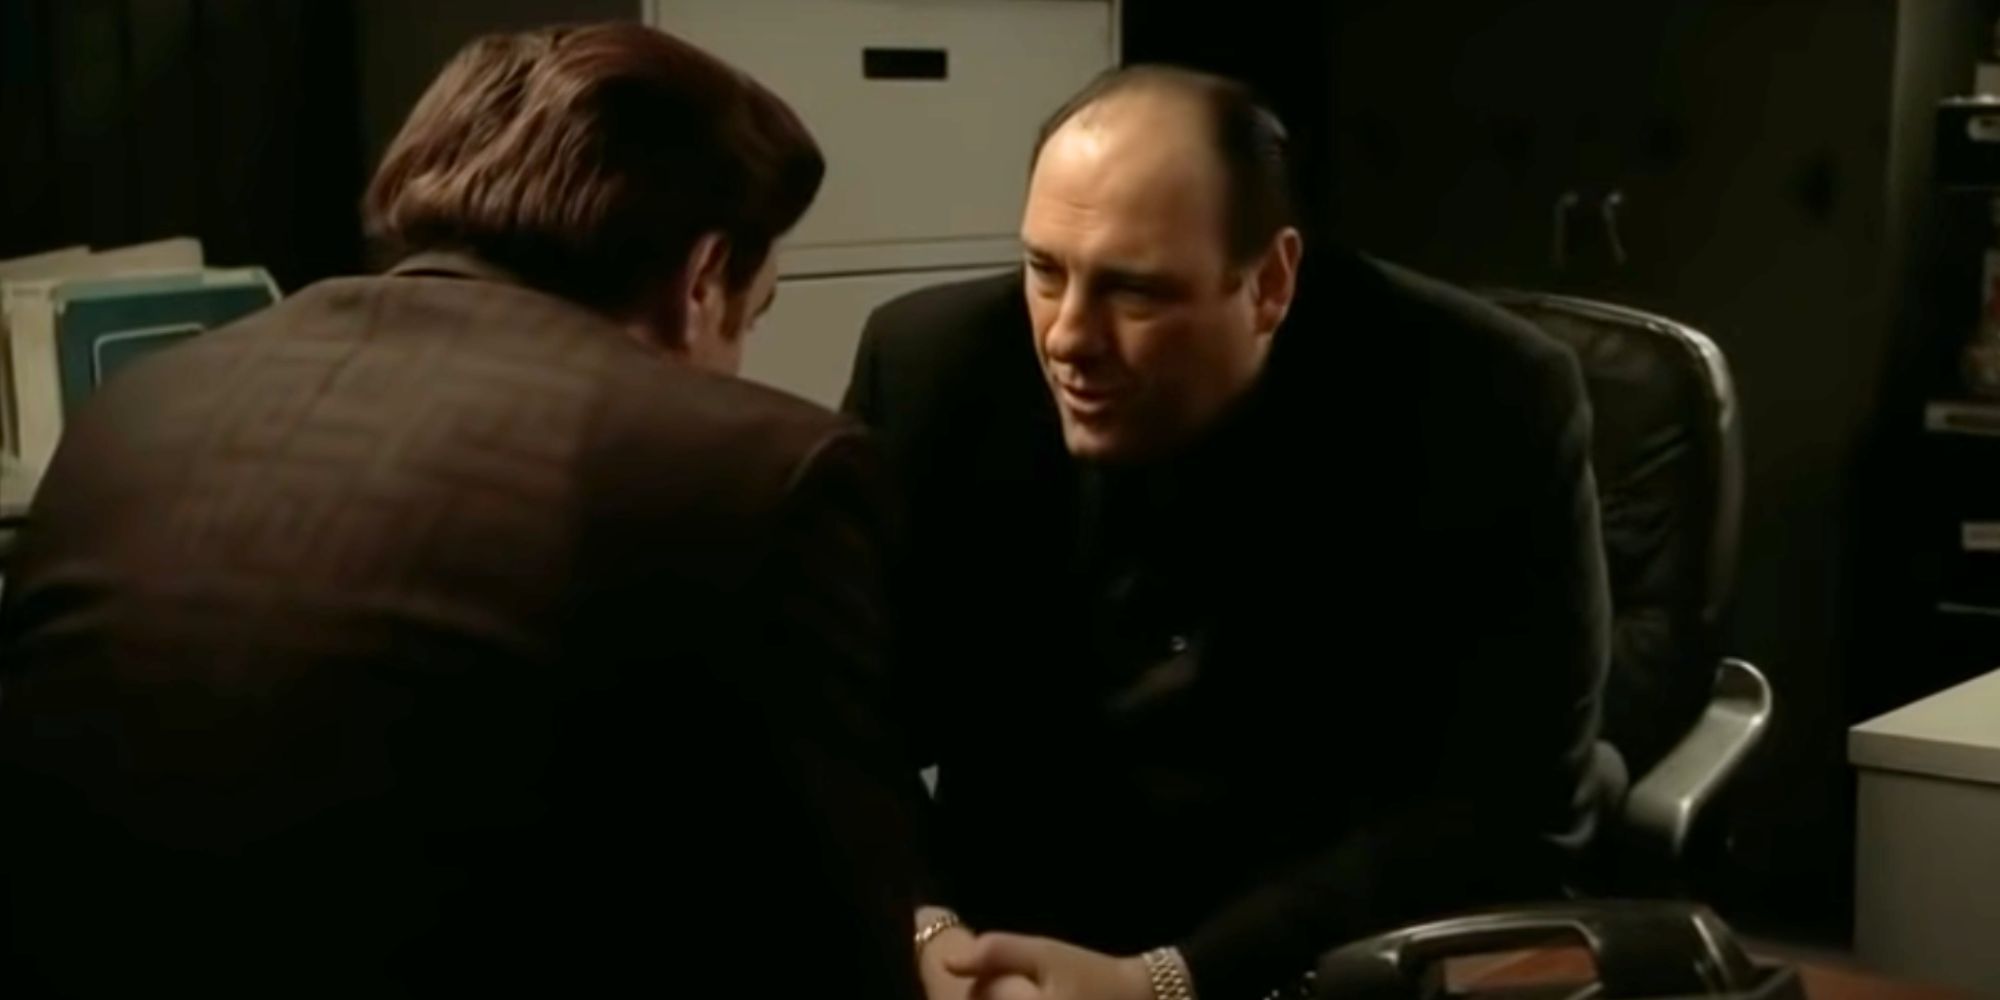 Steven Van Zandt looking at James Gandolfini sitting across from him in The Sopranos